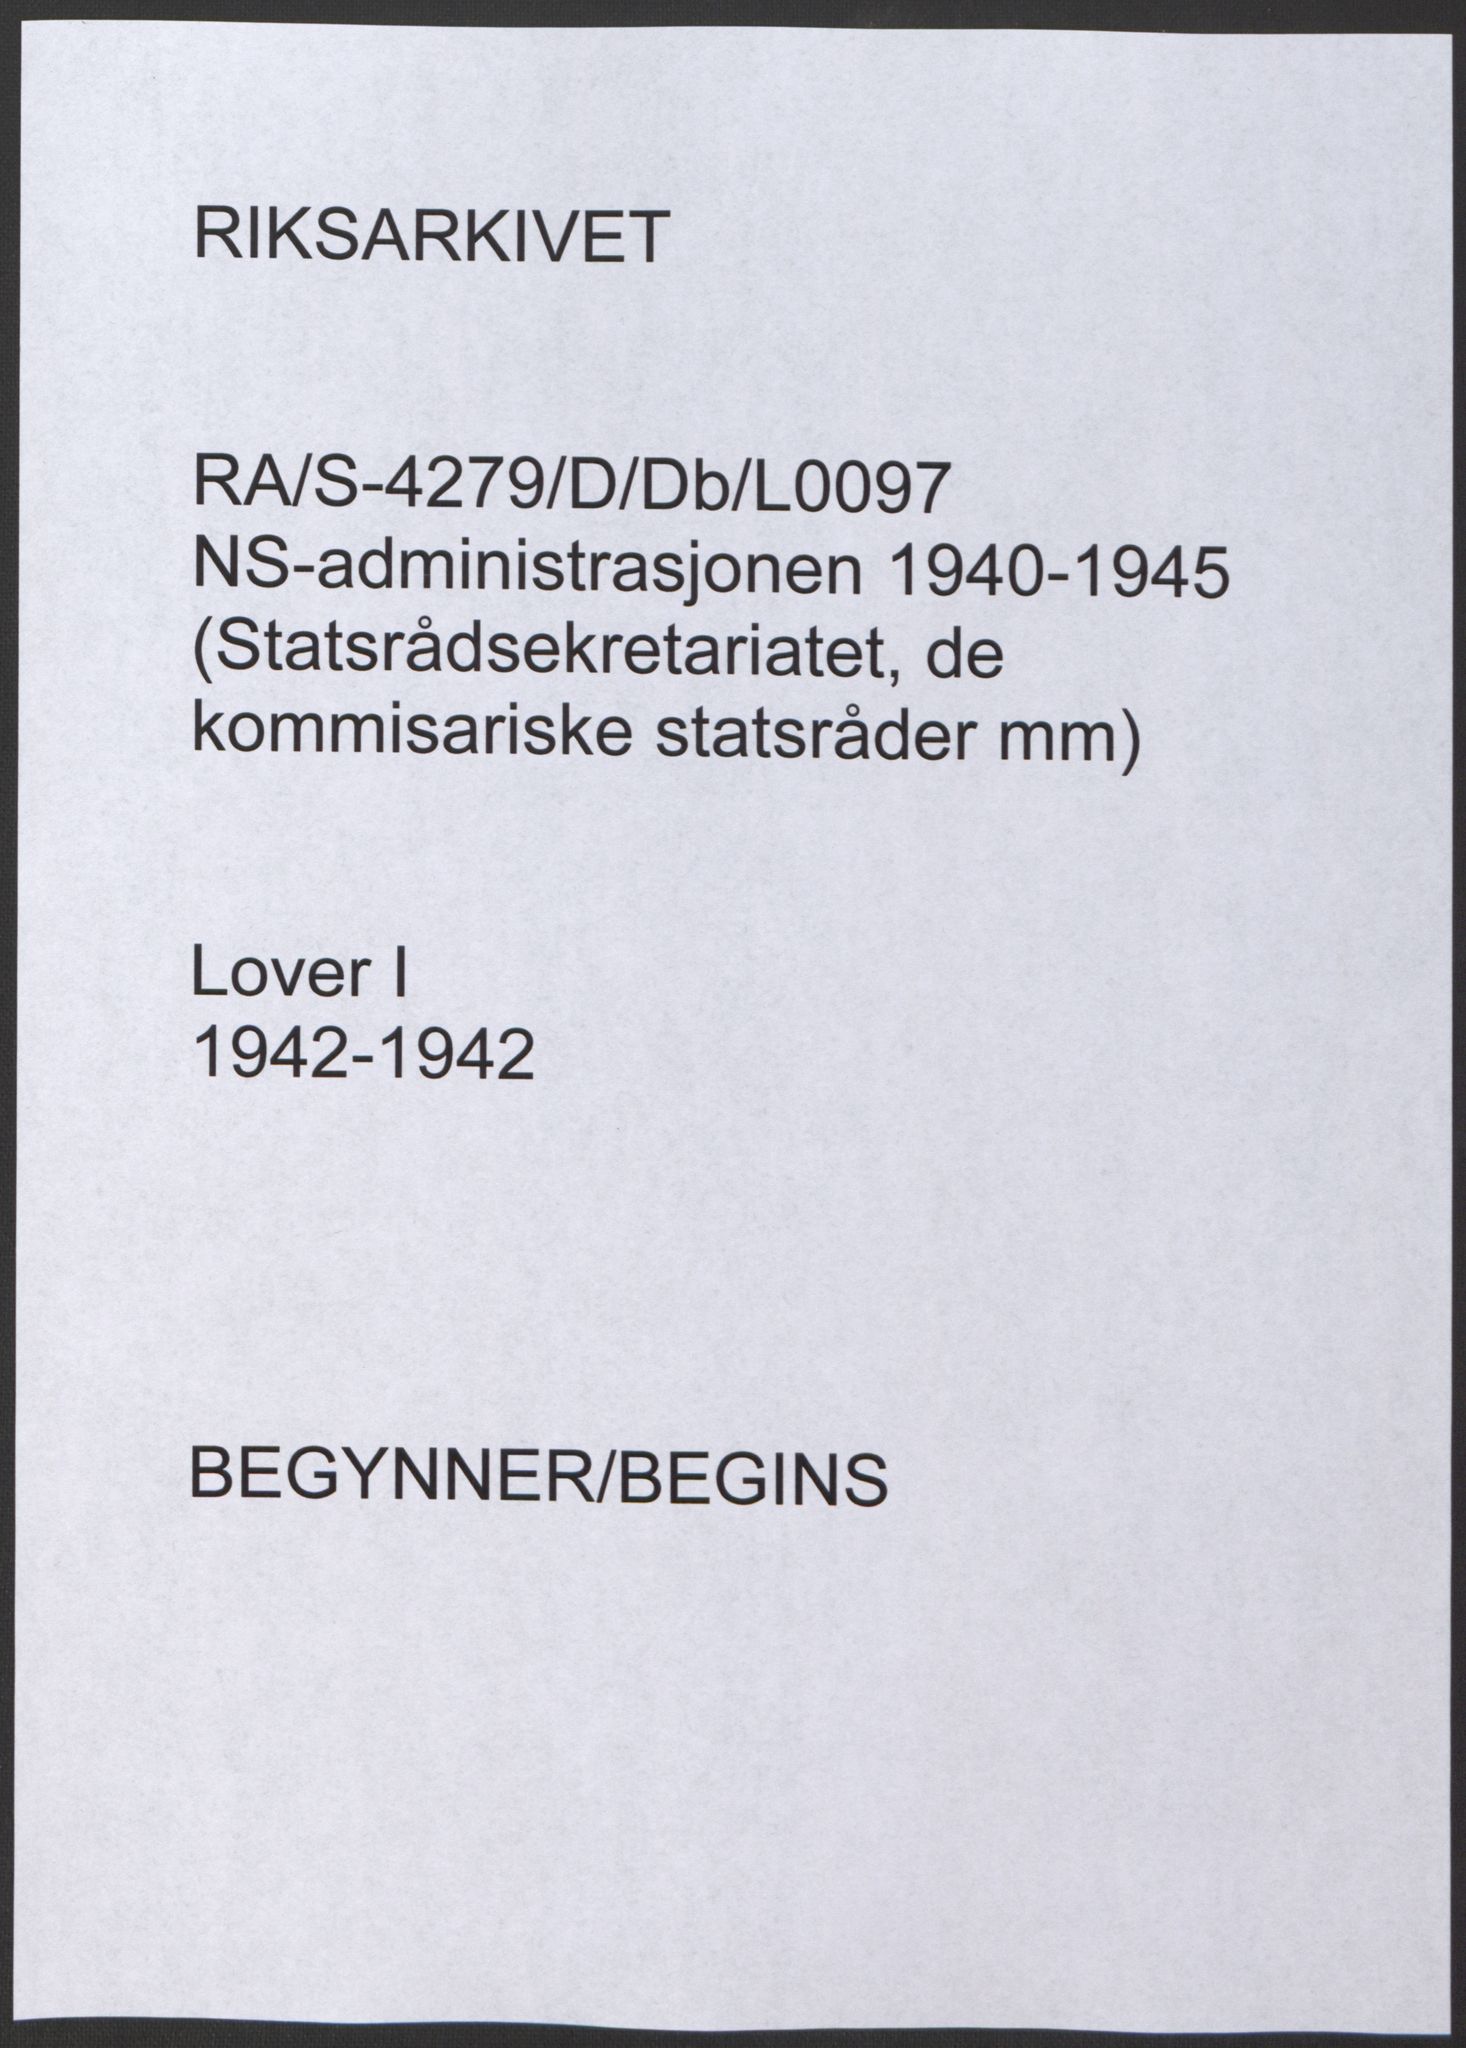 NS-administrasjonen 1940-1945 (Statsrådsekretariatet, de kommisariske statsråder mm), RA/S-4279/D/Db/L0097: Lover I, 1942, s. 1